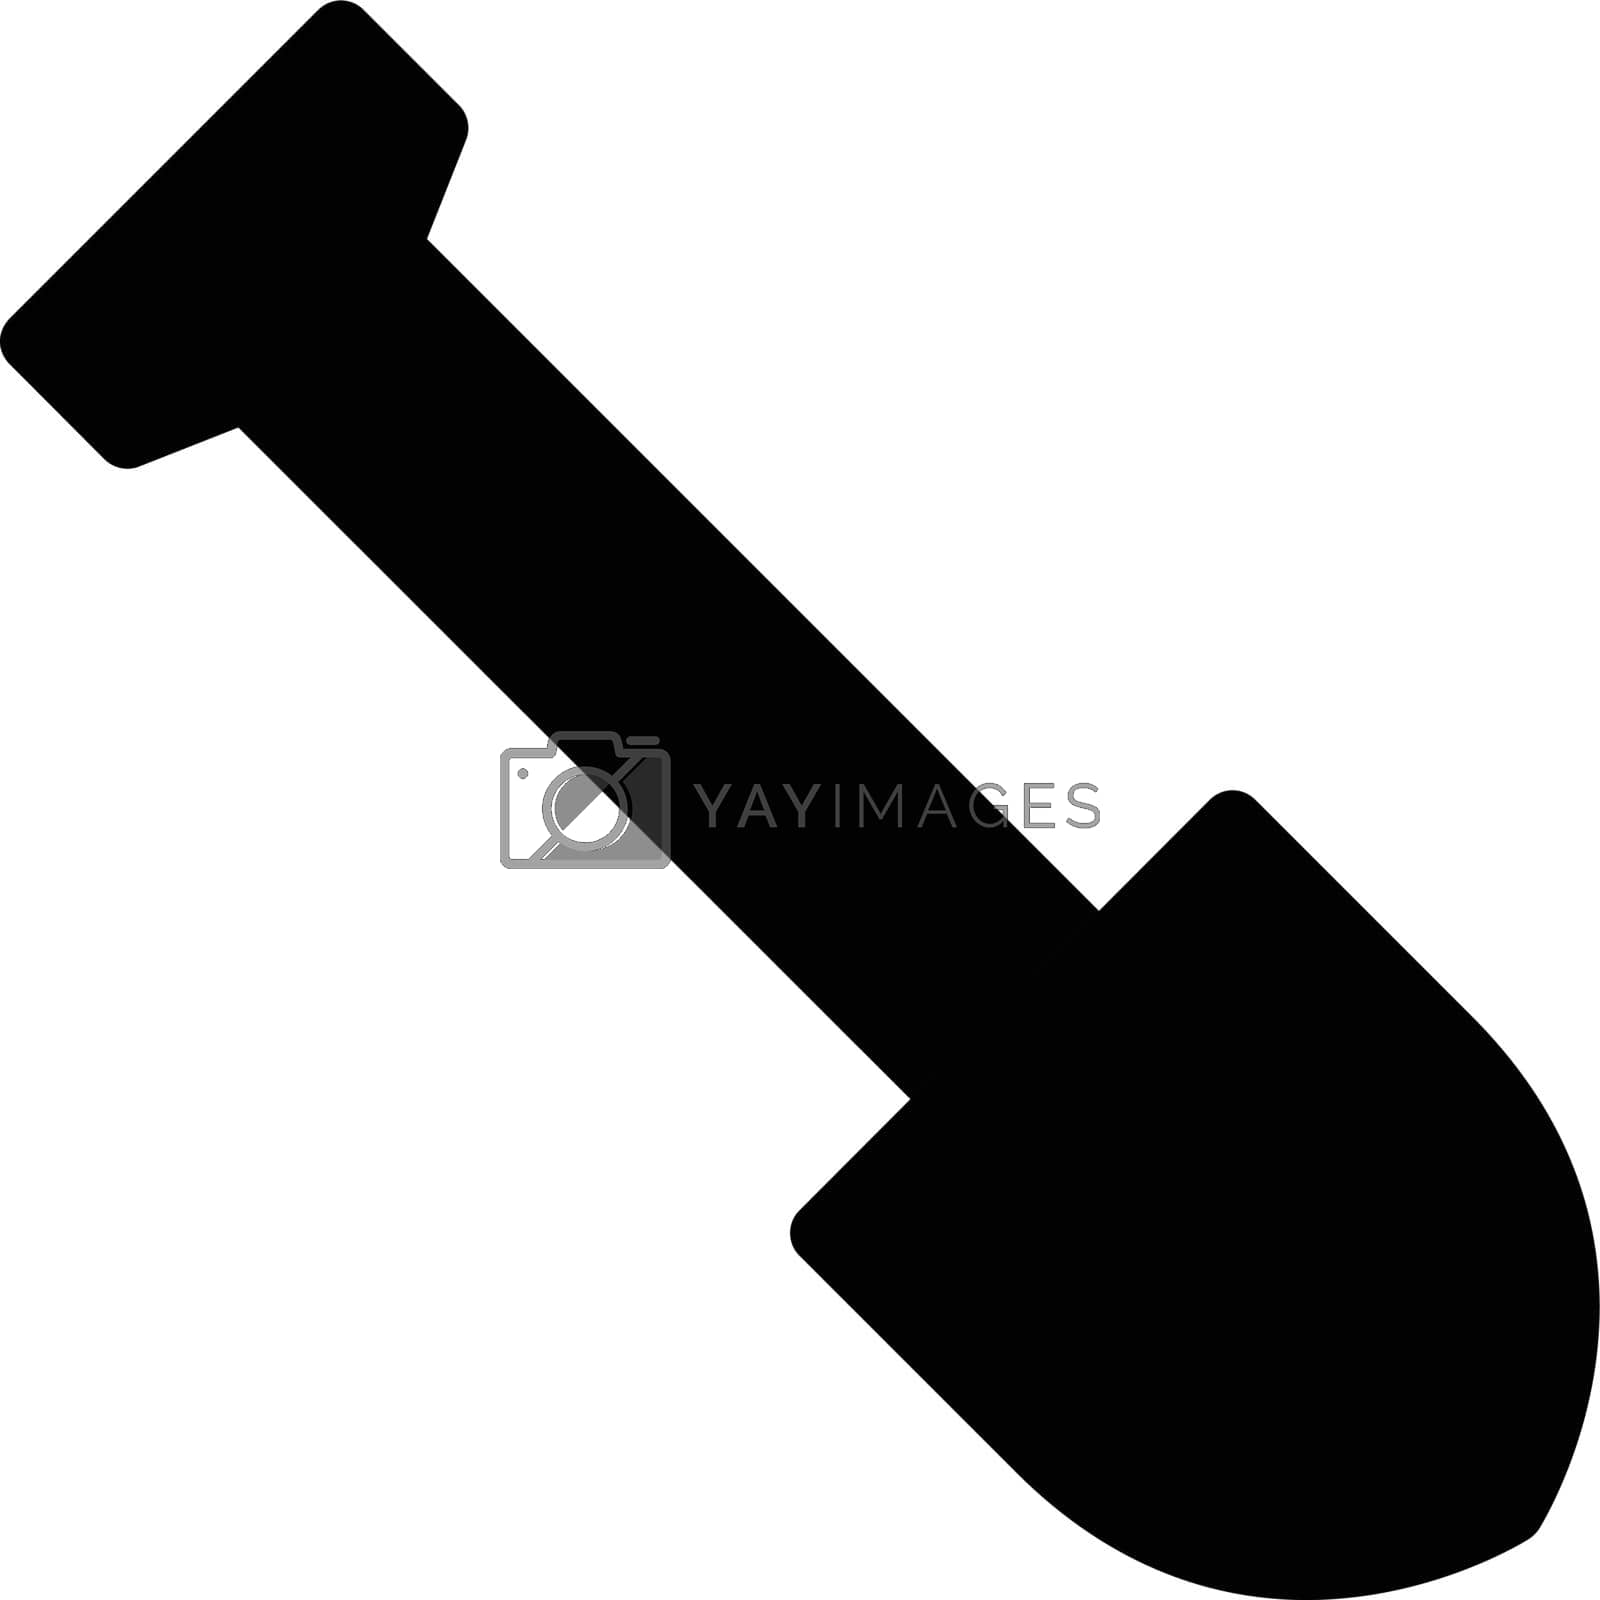 Royalty free image of shovel by vectorstall